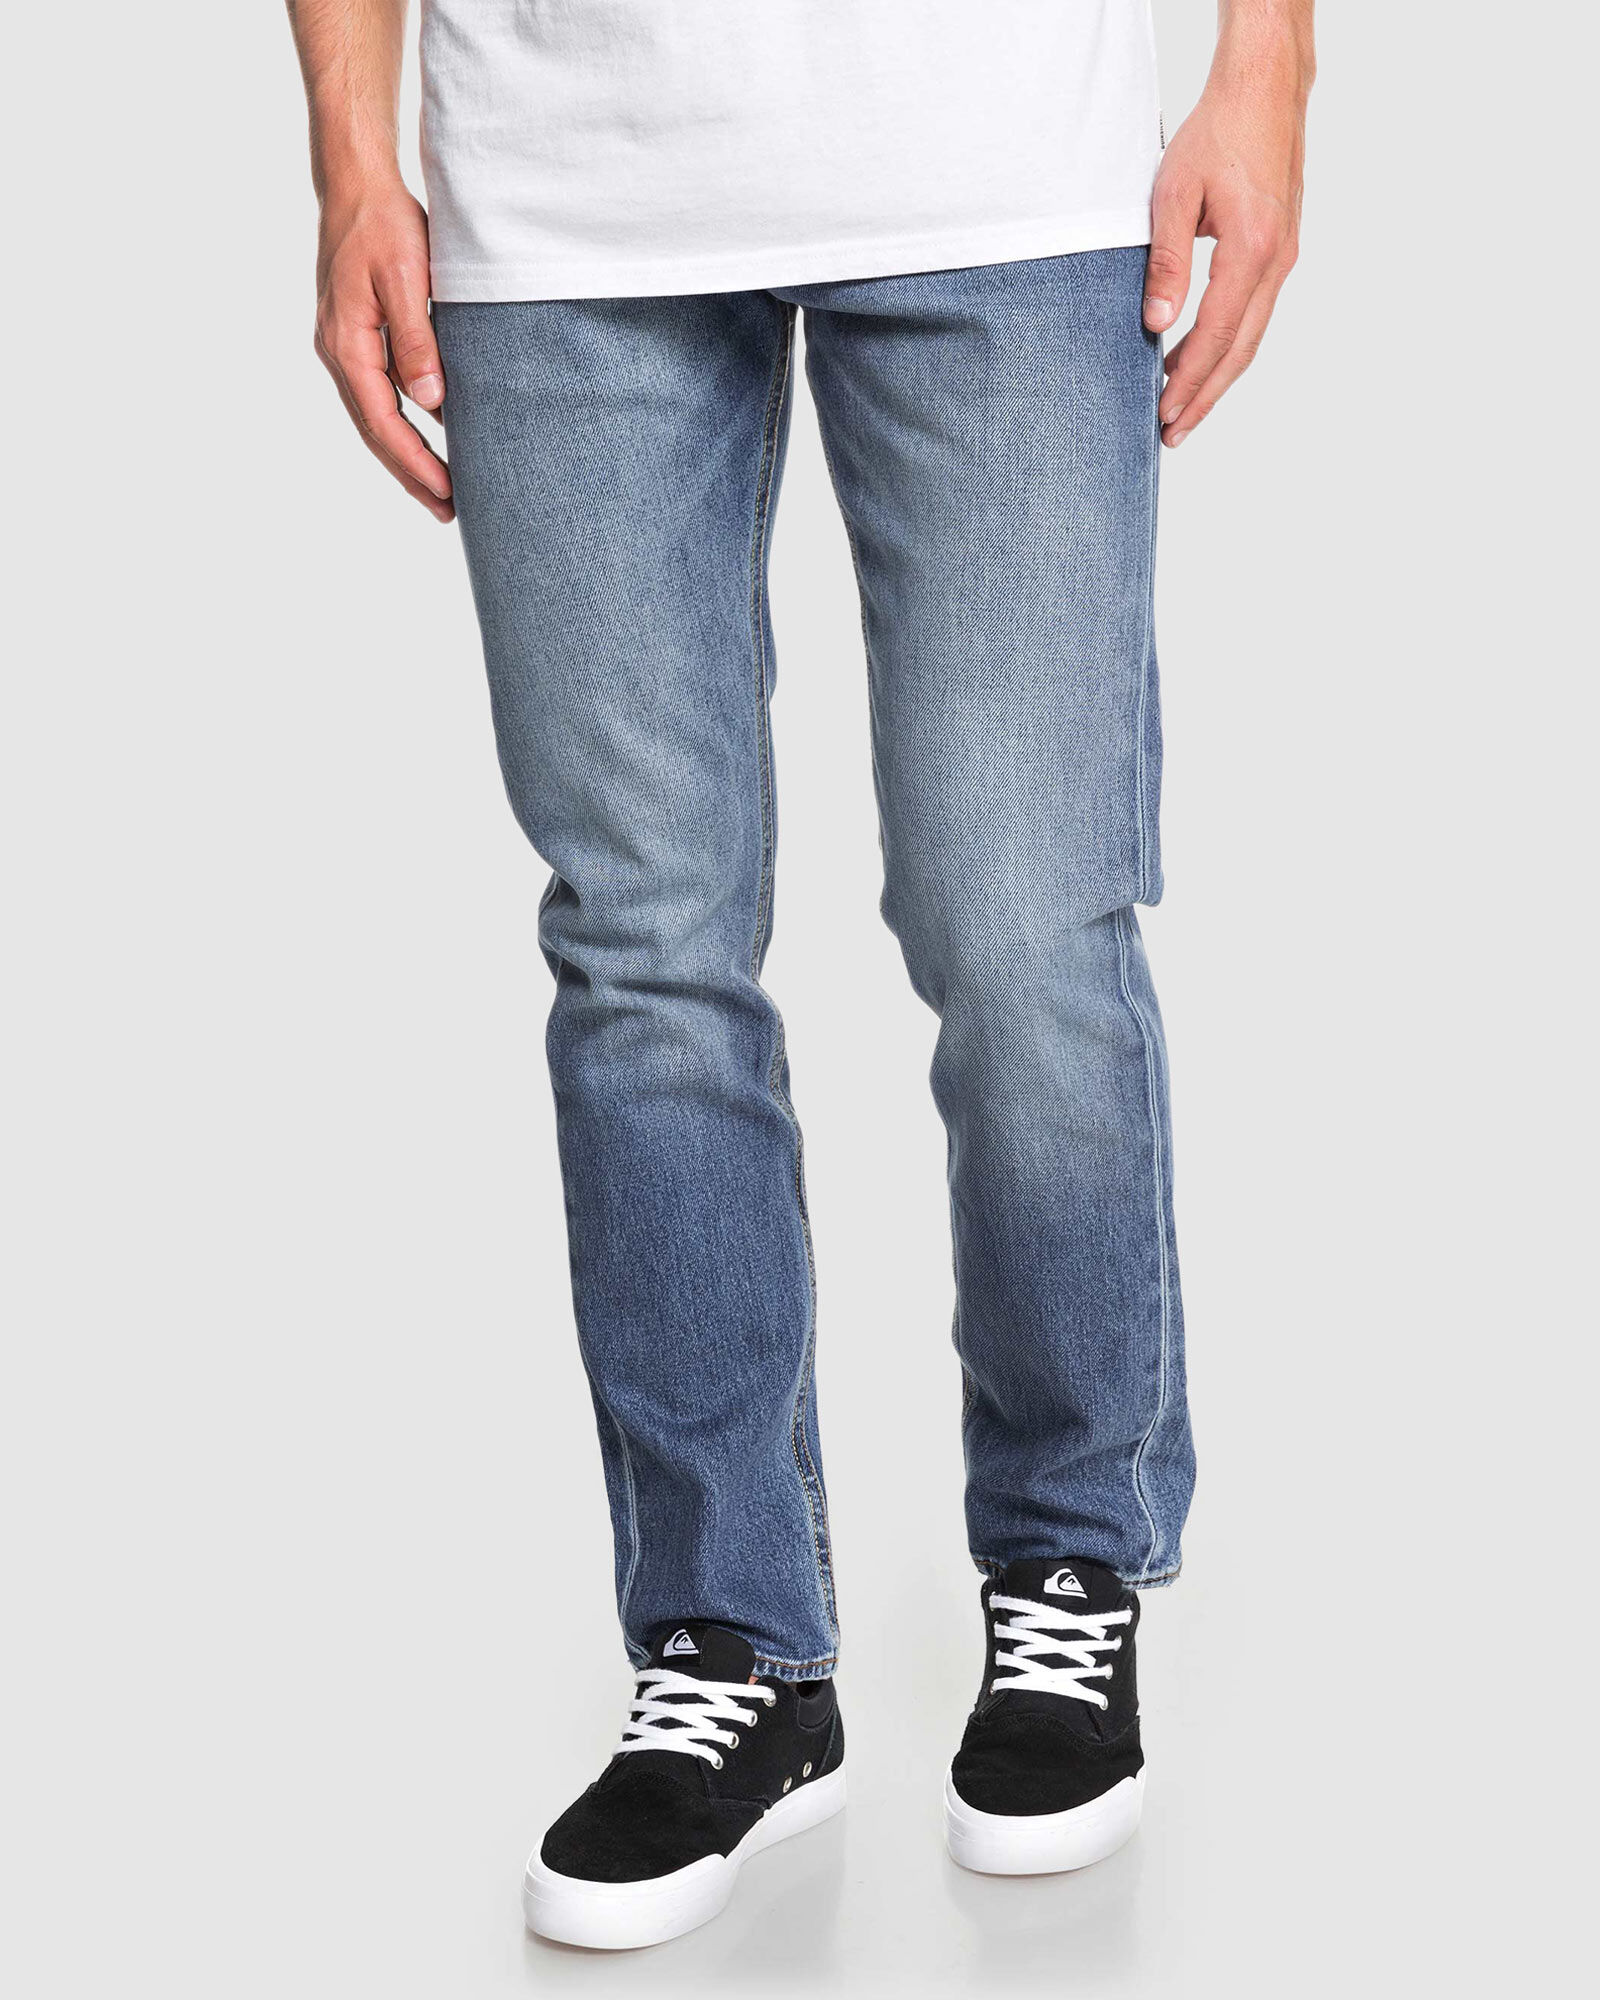 Quiksilver Quiksilver Quikjean Mens Size 38 Denim Jeans Grey Straight Fit 